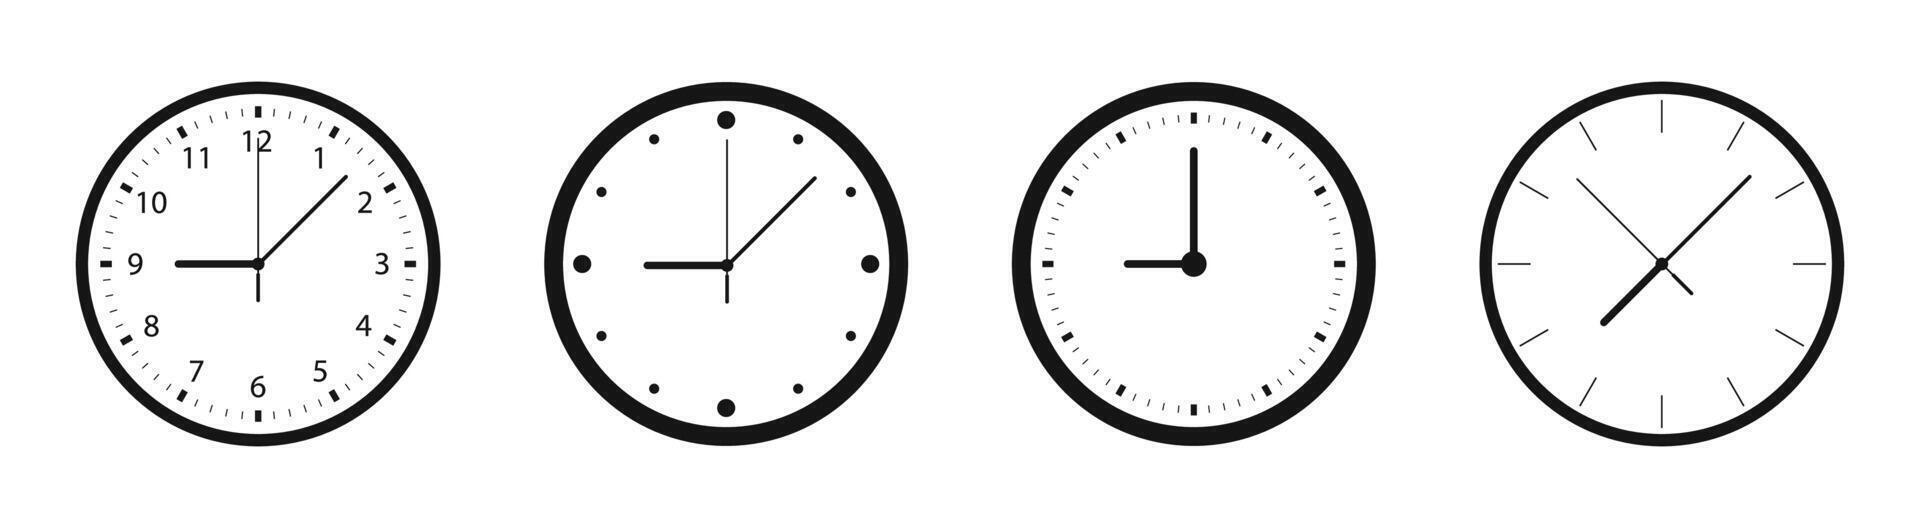 Clock icon set. Flat clock icons. Time measurement concept. vector